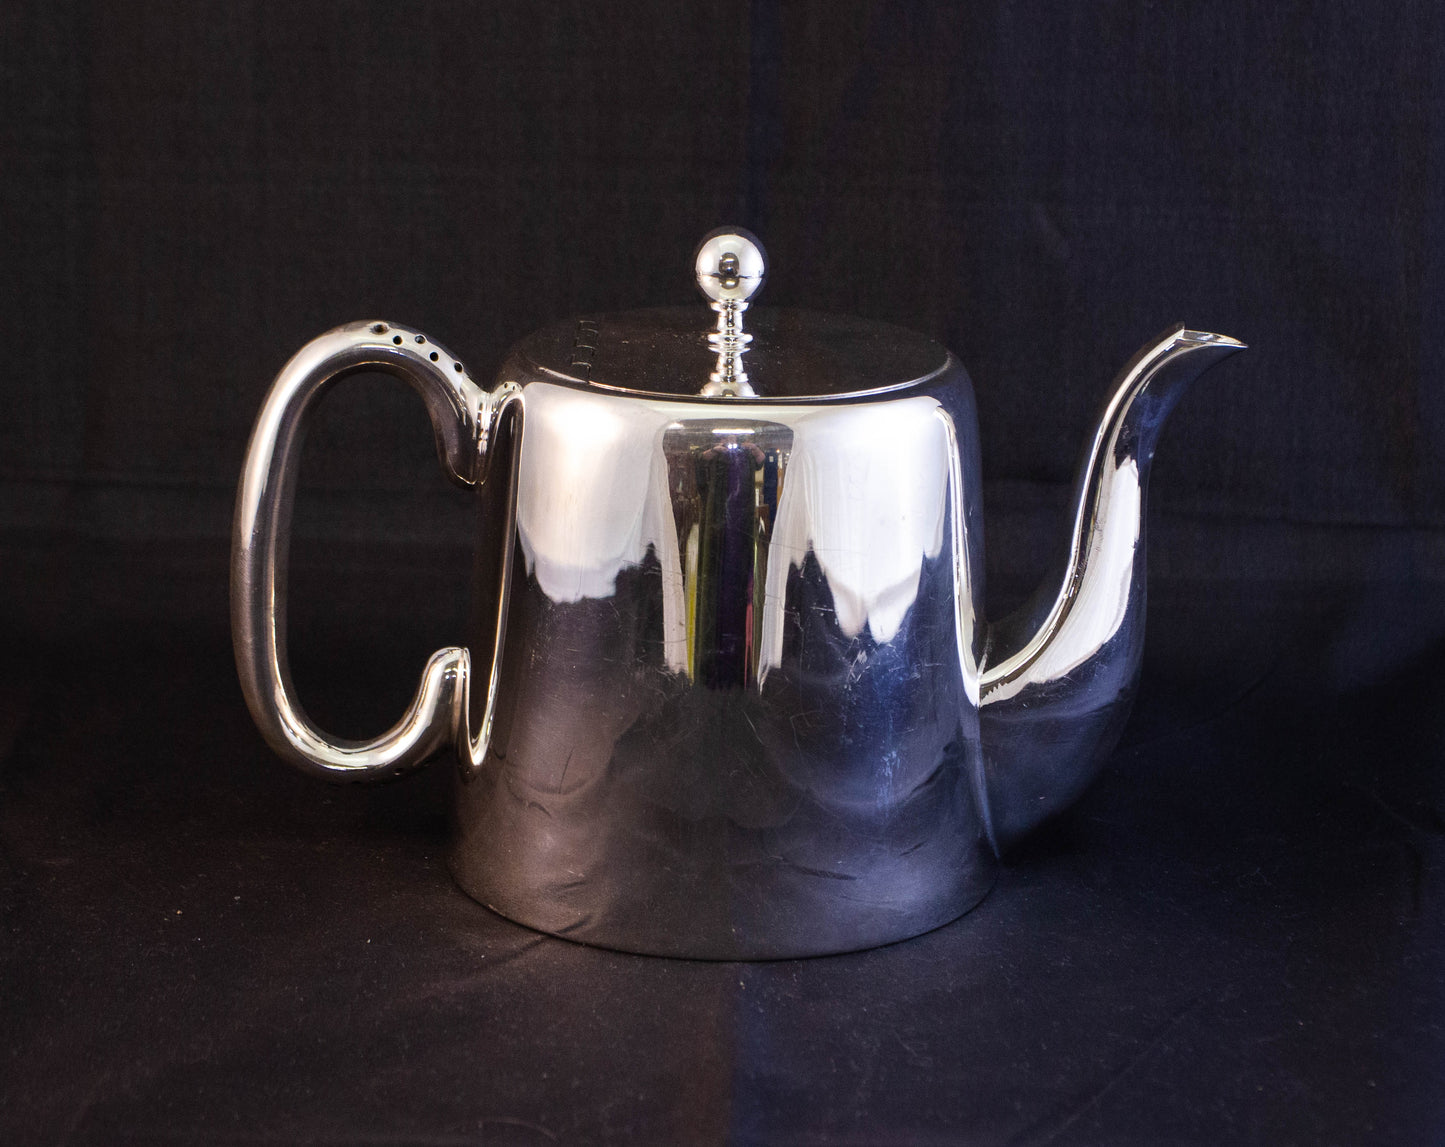 Hotelware Tea Pot